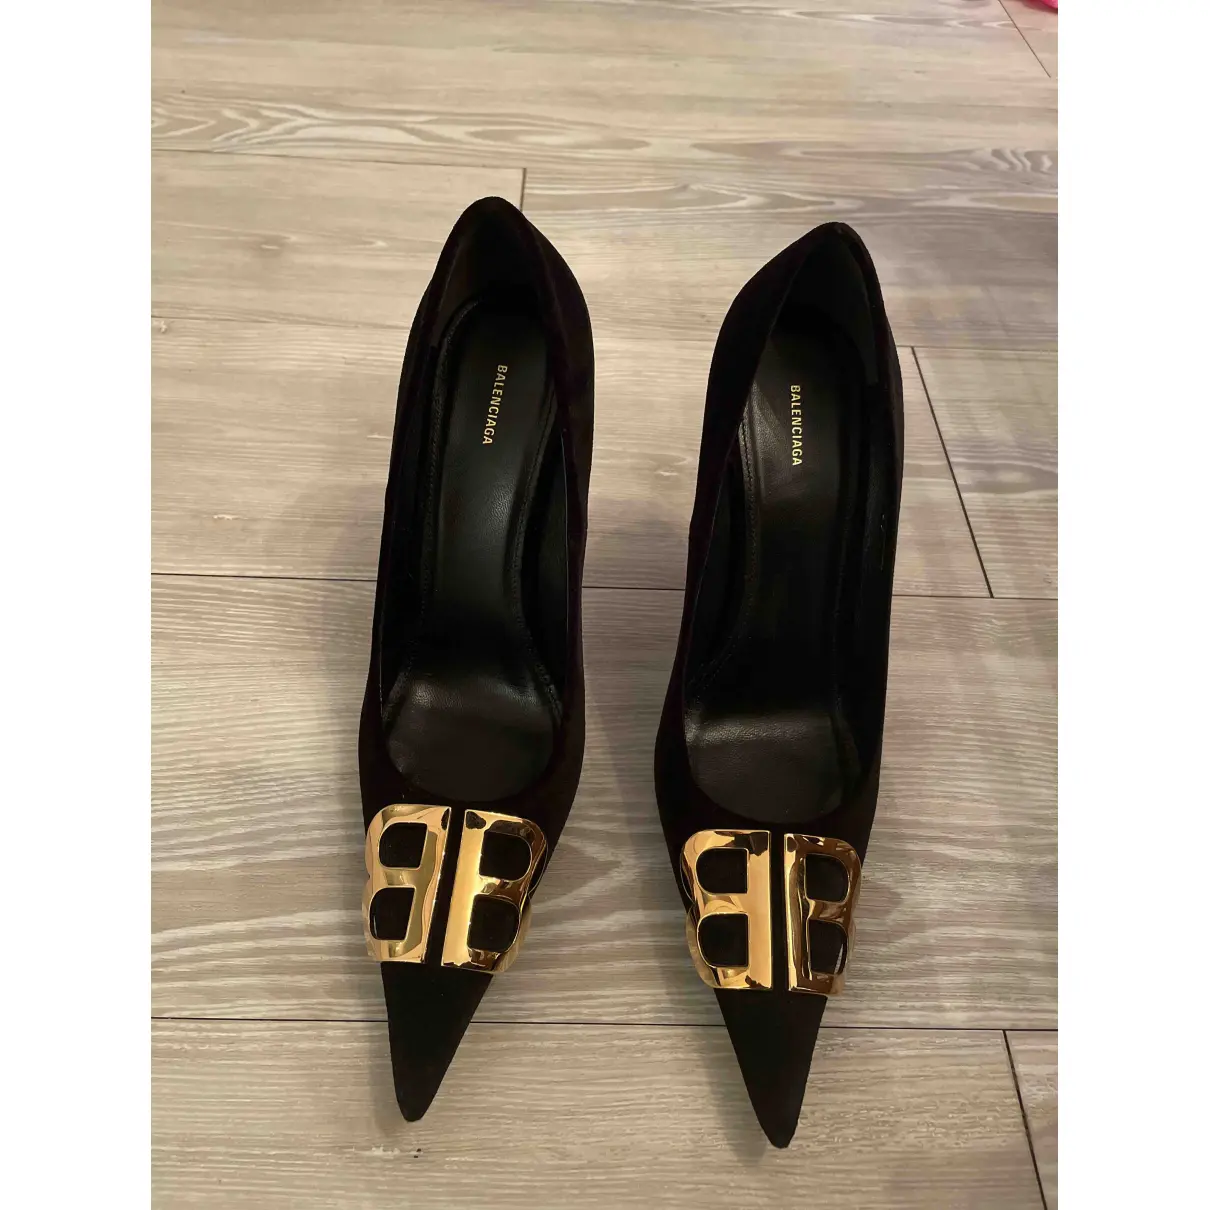 Buy Balenciaga BB velvet heels online